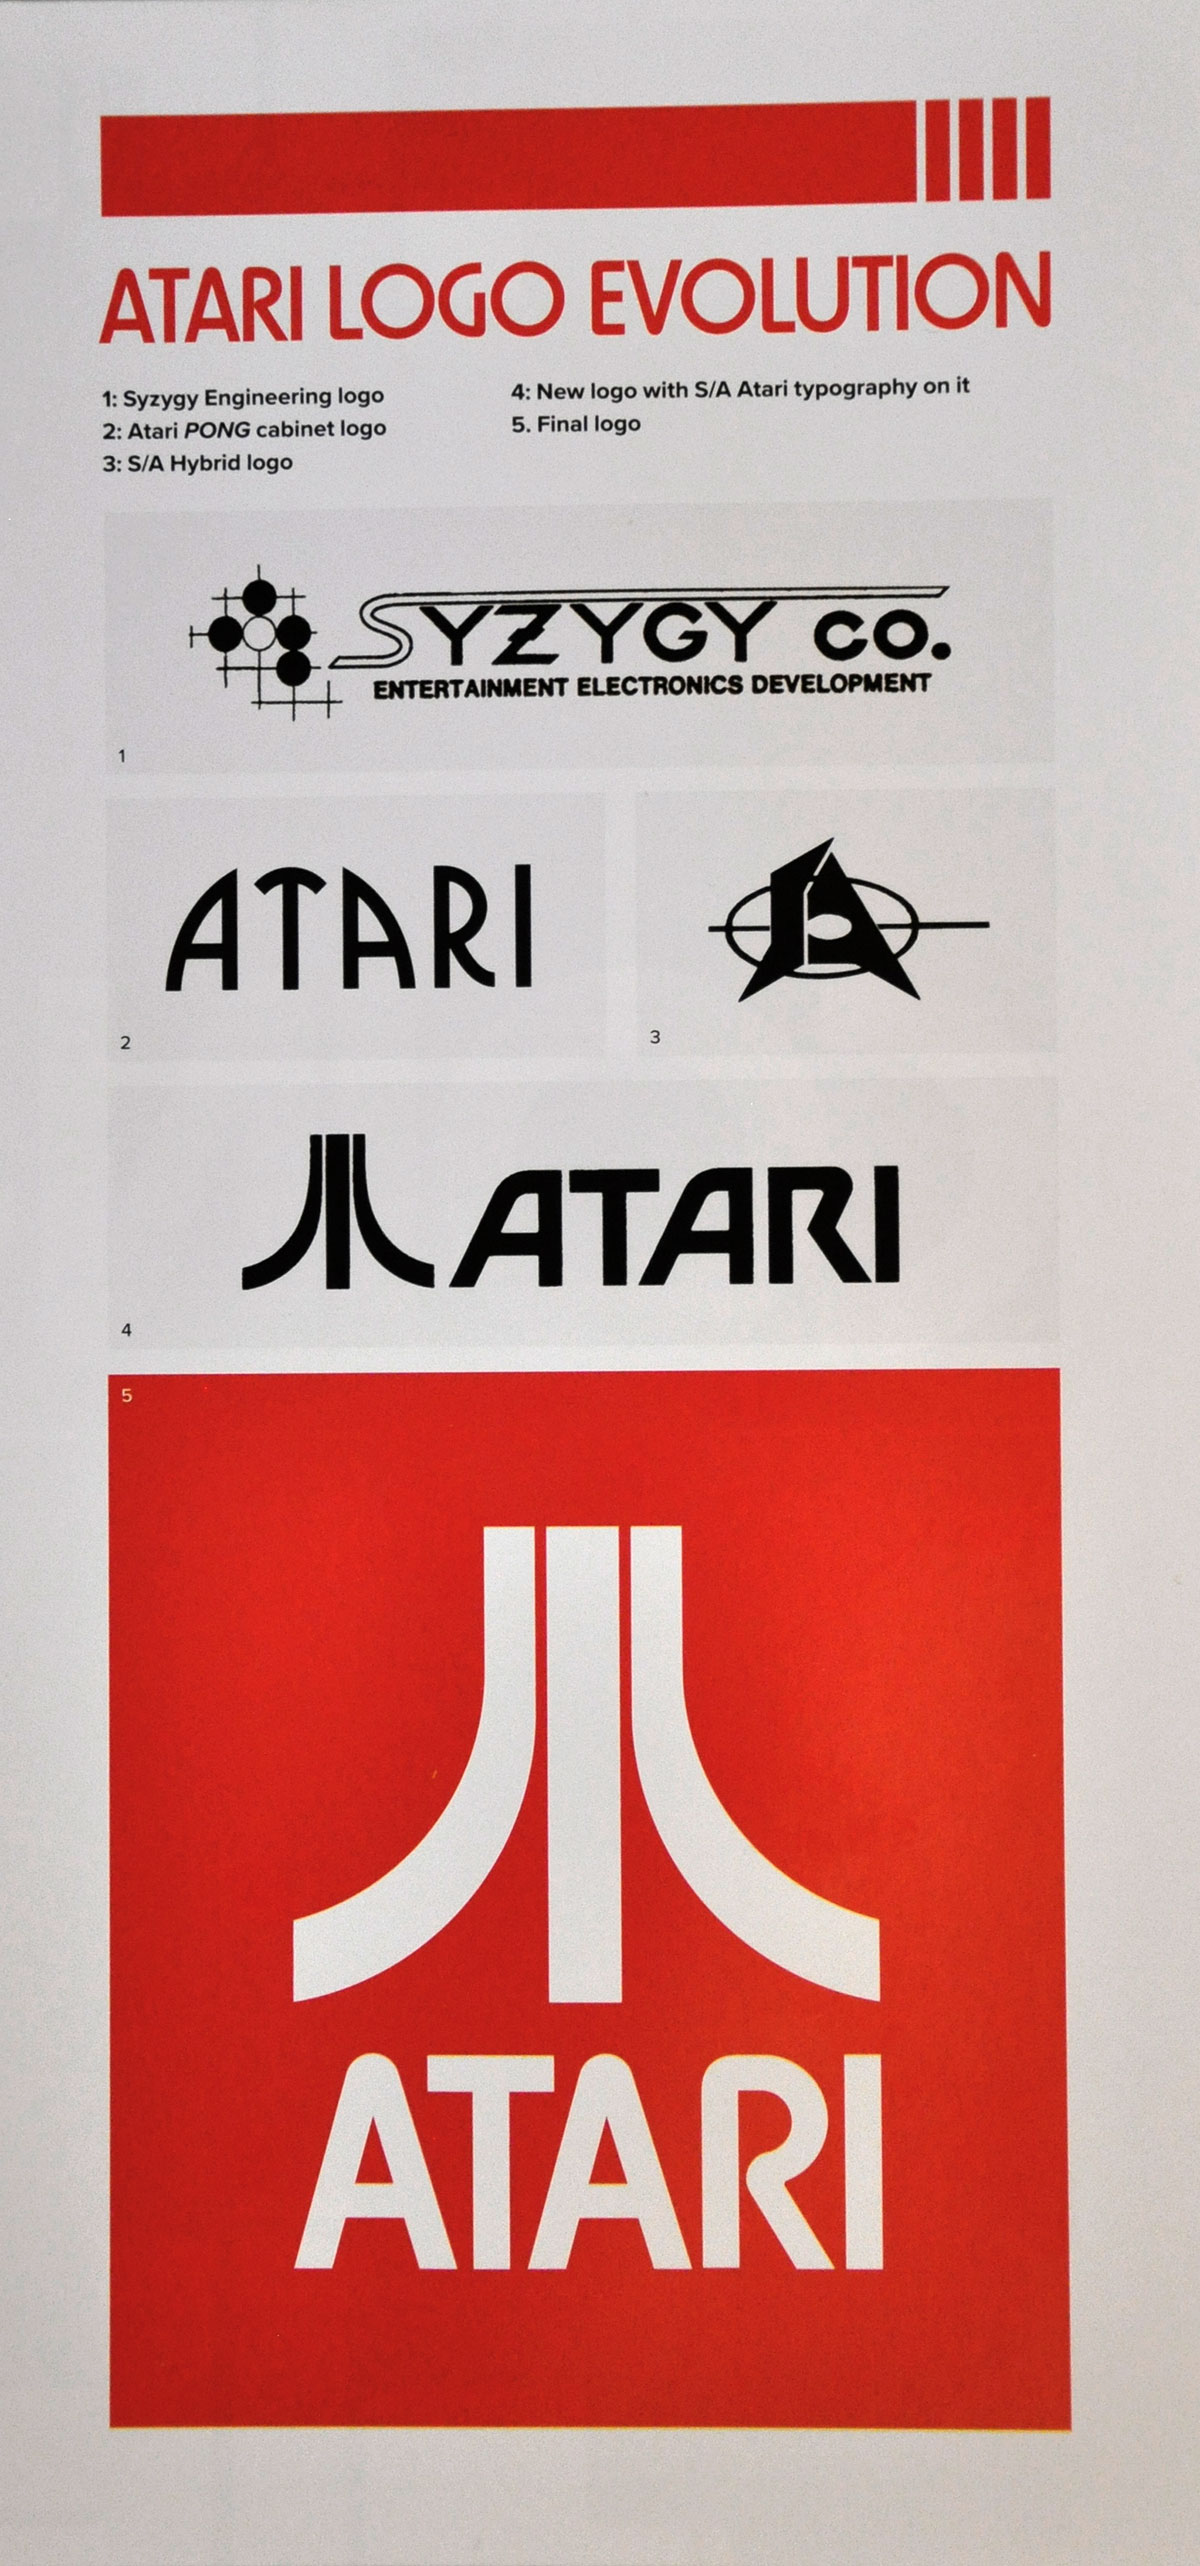 Atari logo evolution